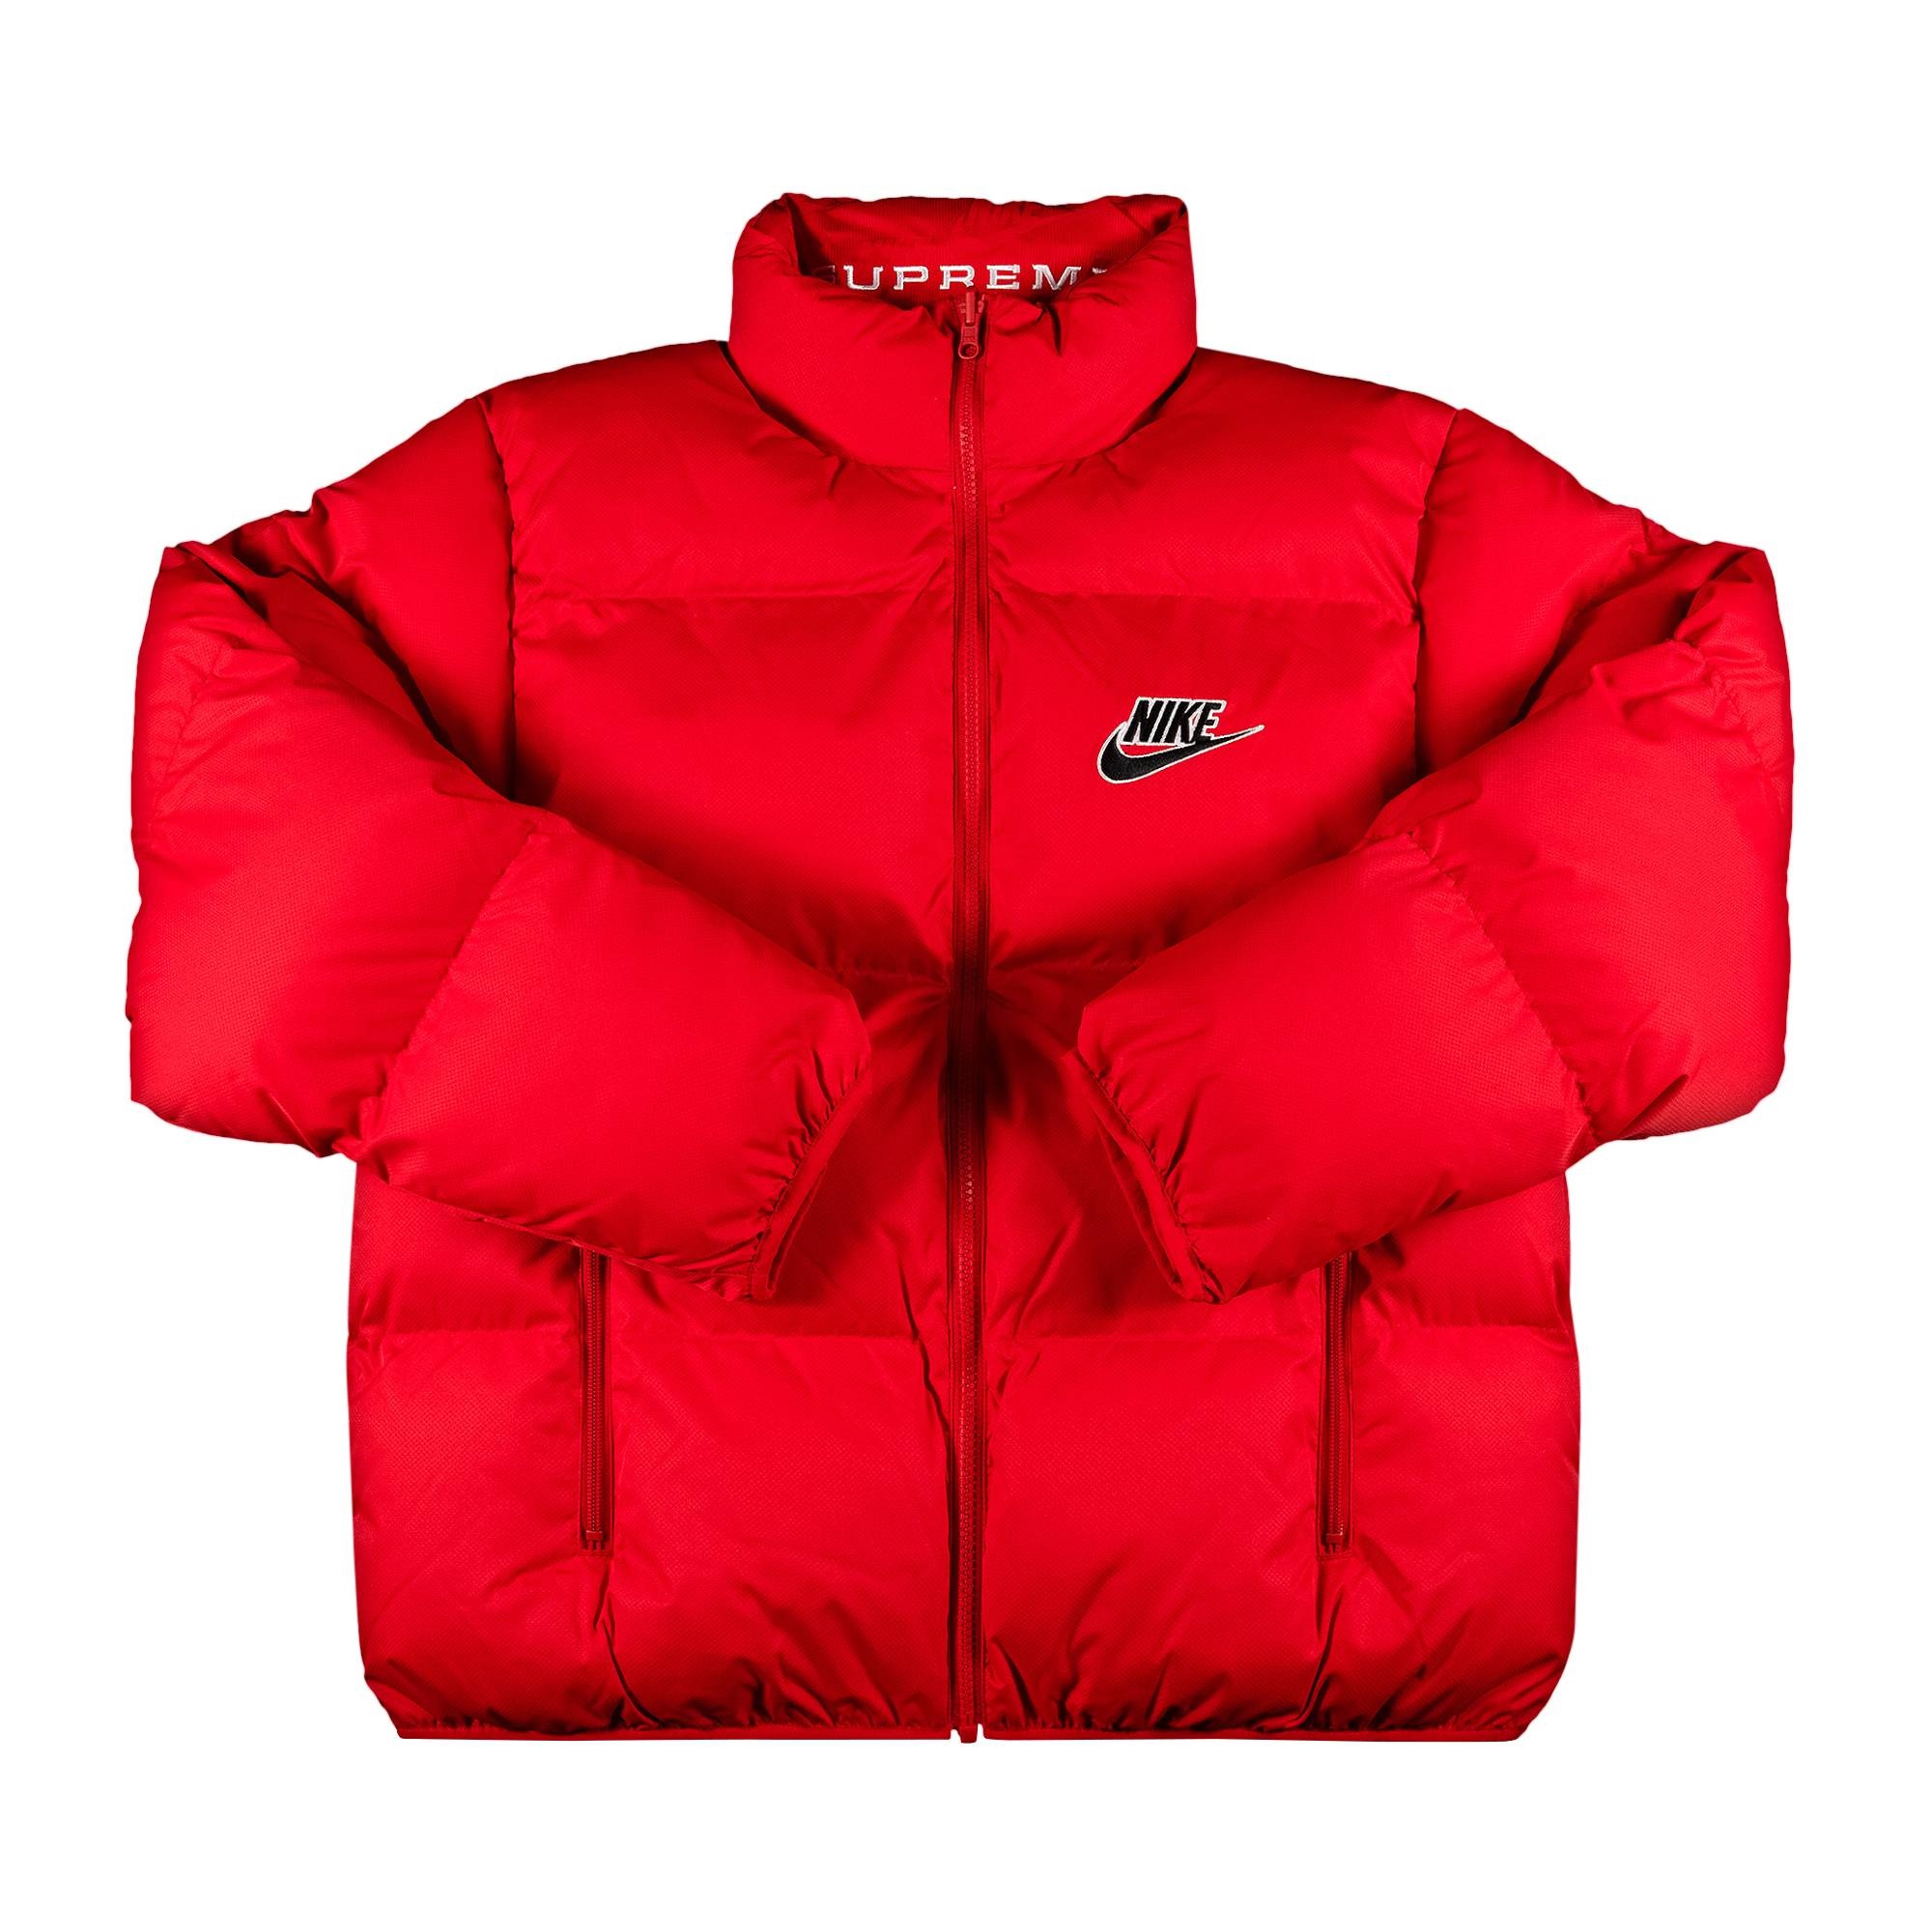 Supreme x Nike Reversible Puffy Jacket 'Red' - 1